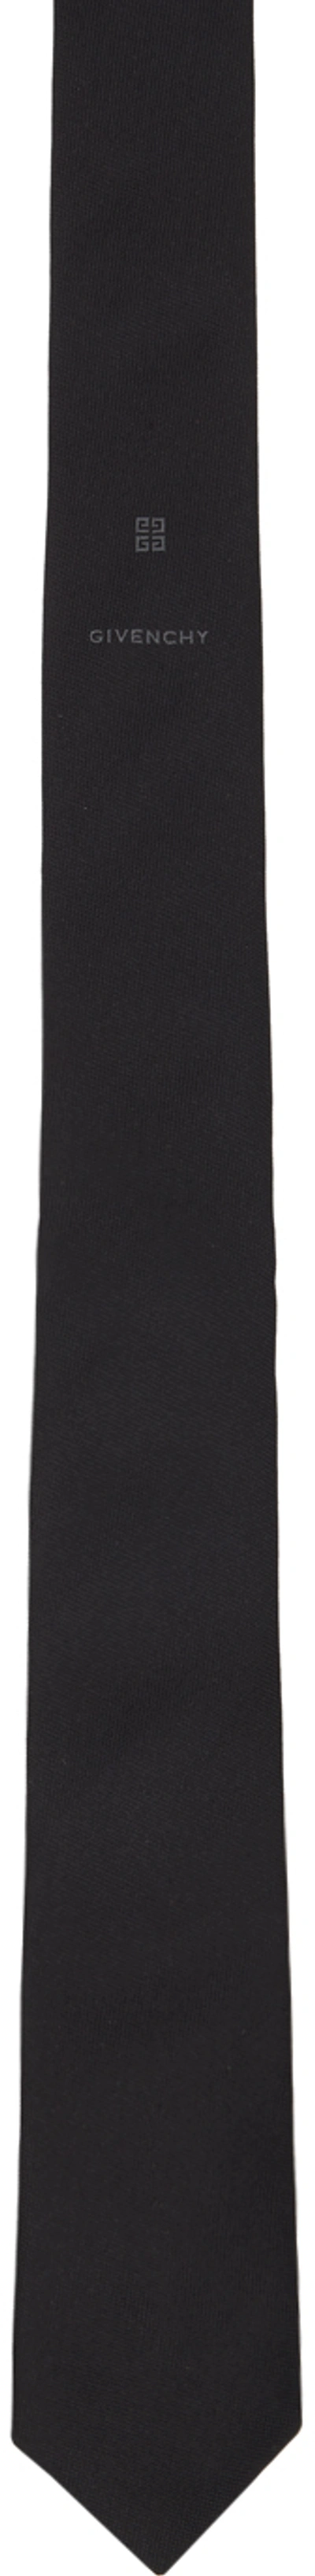 Givenchy Black 4g Tie In Black Tonal